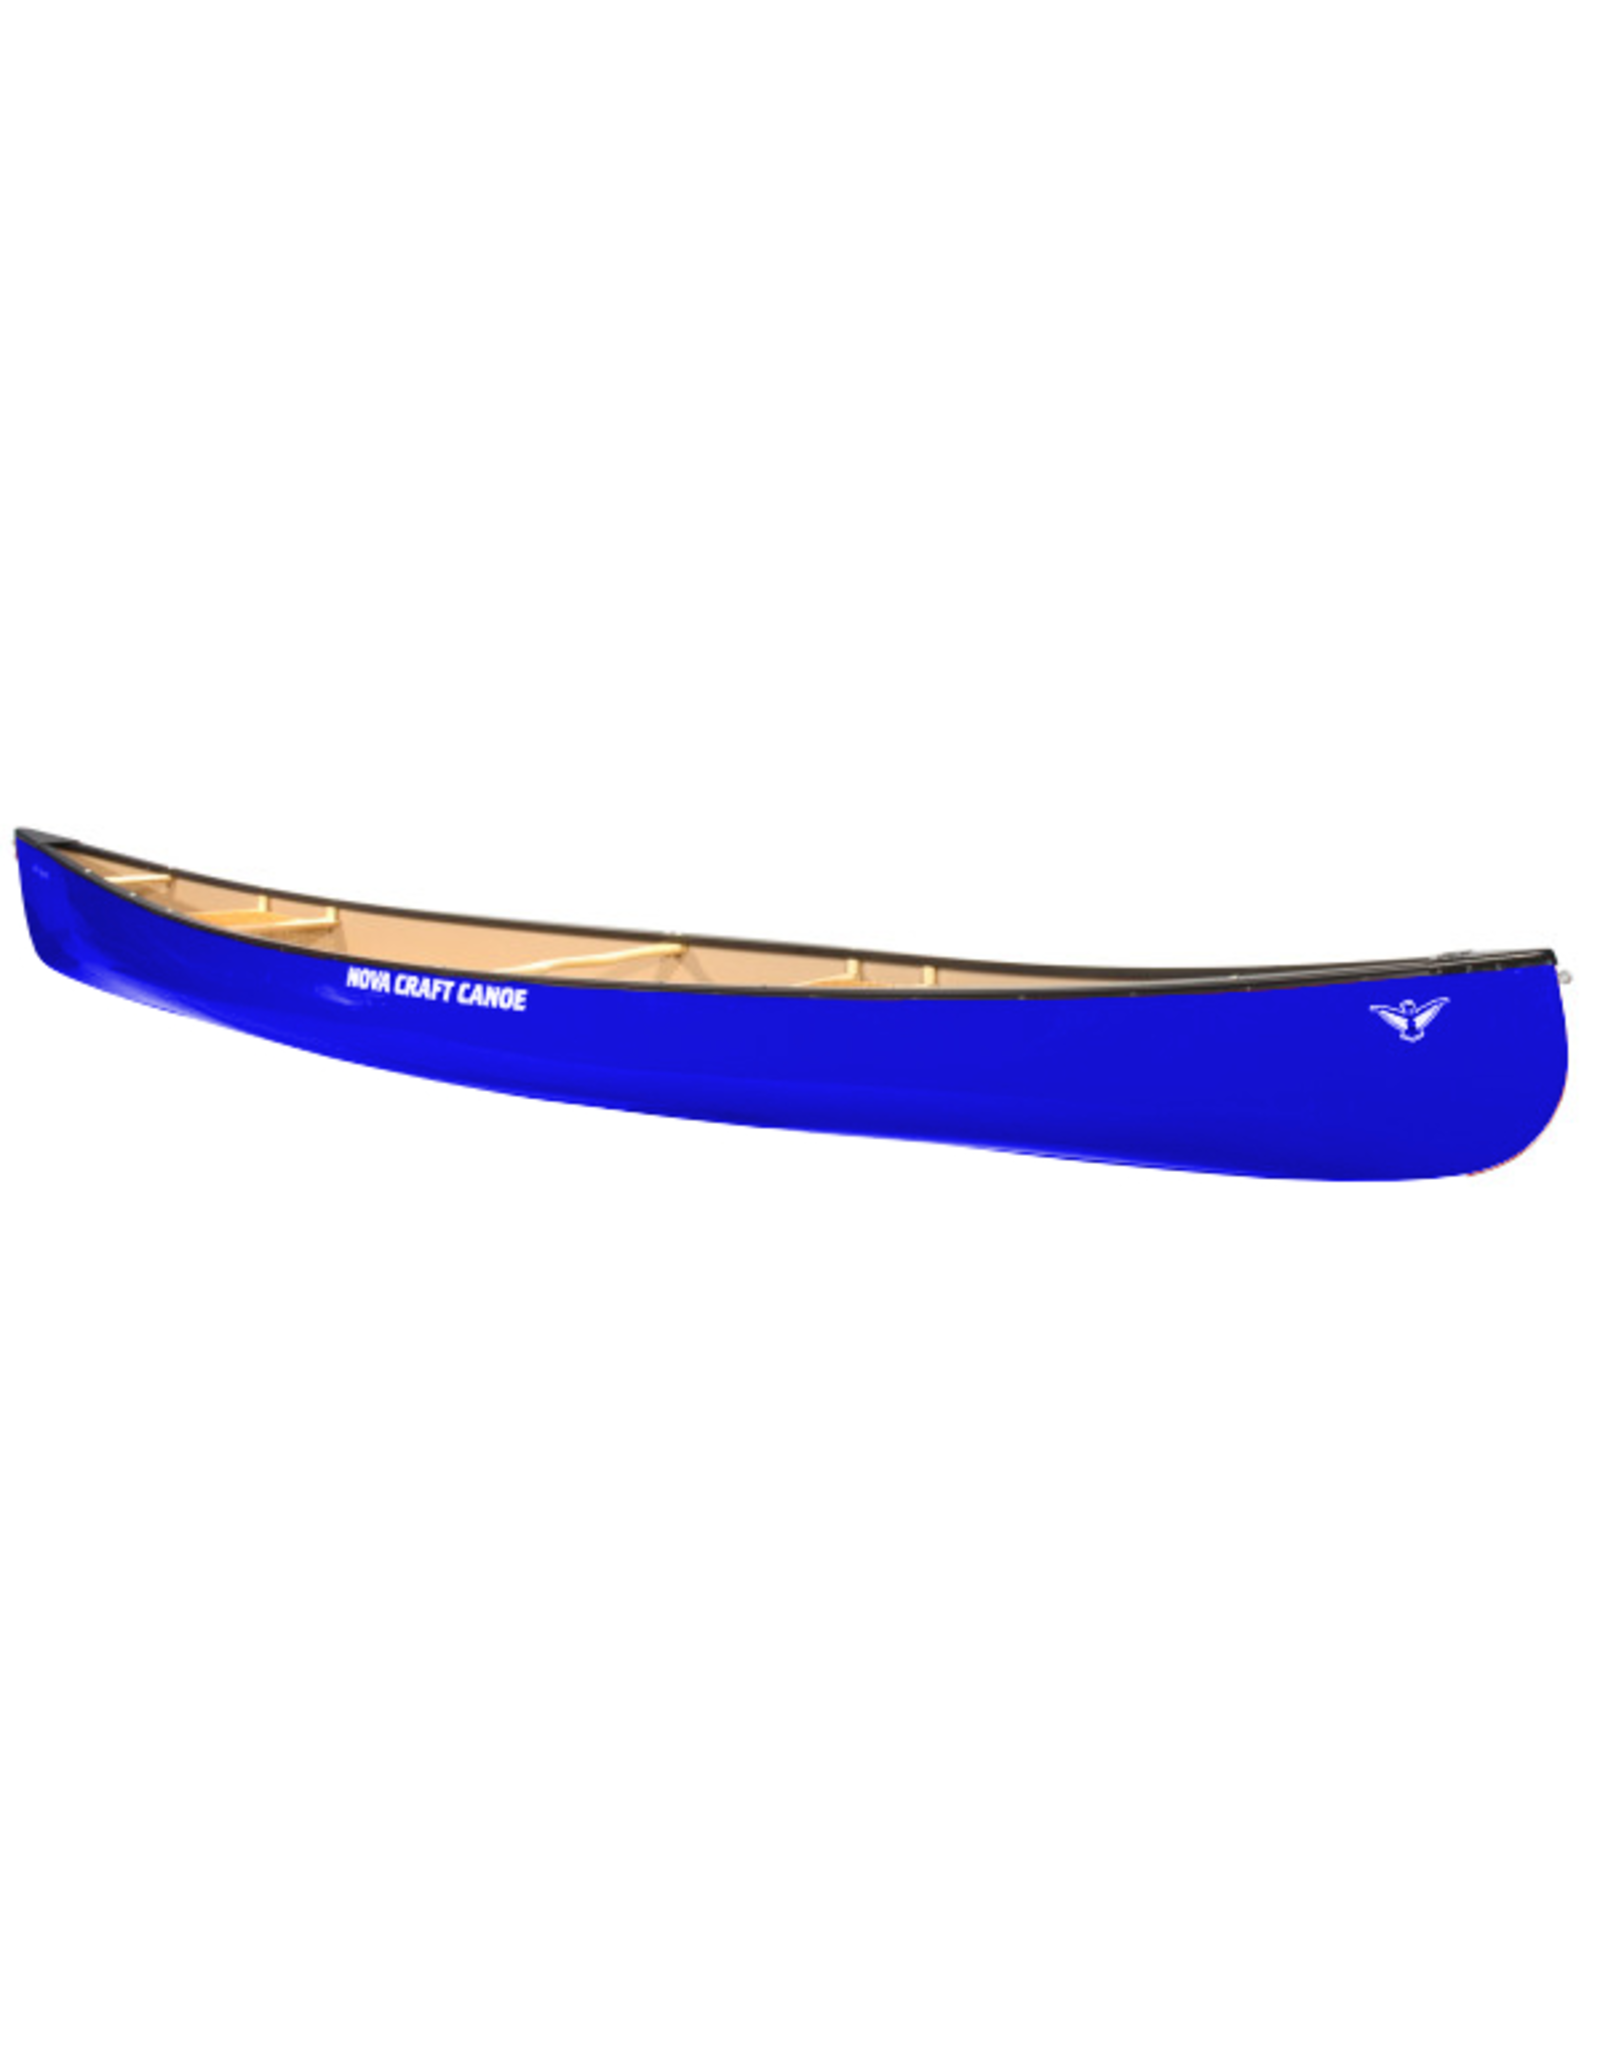 Nova Craft Nova Craft Canoe Prospecteur 15